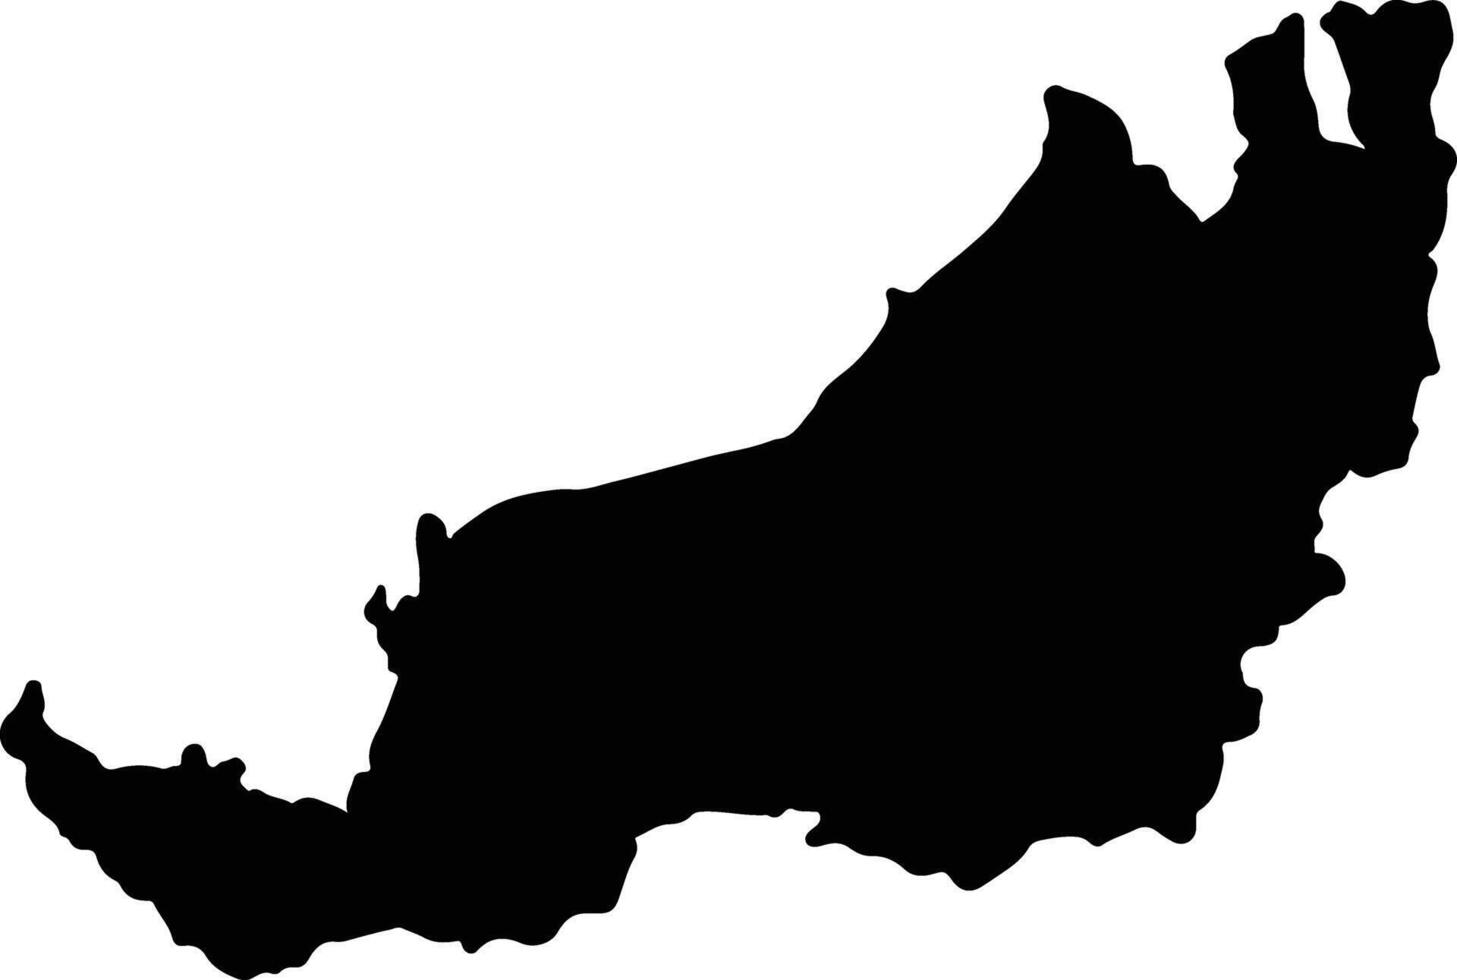 Sarawak Malasia silueta mapa vector